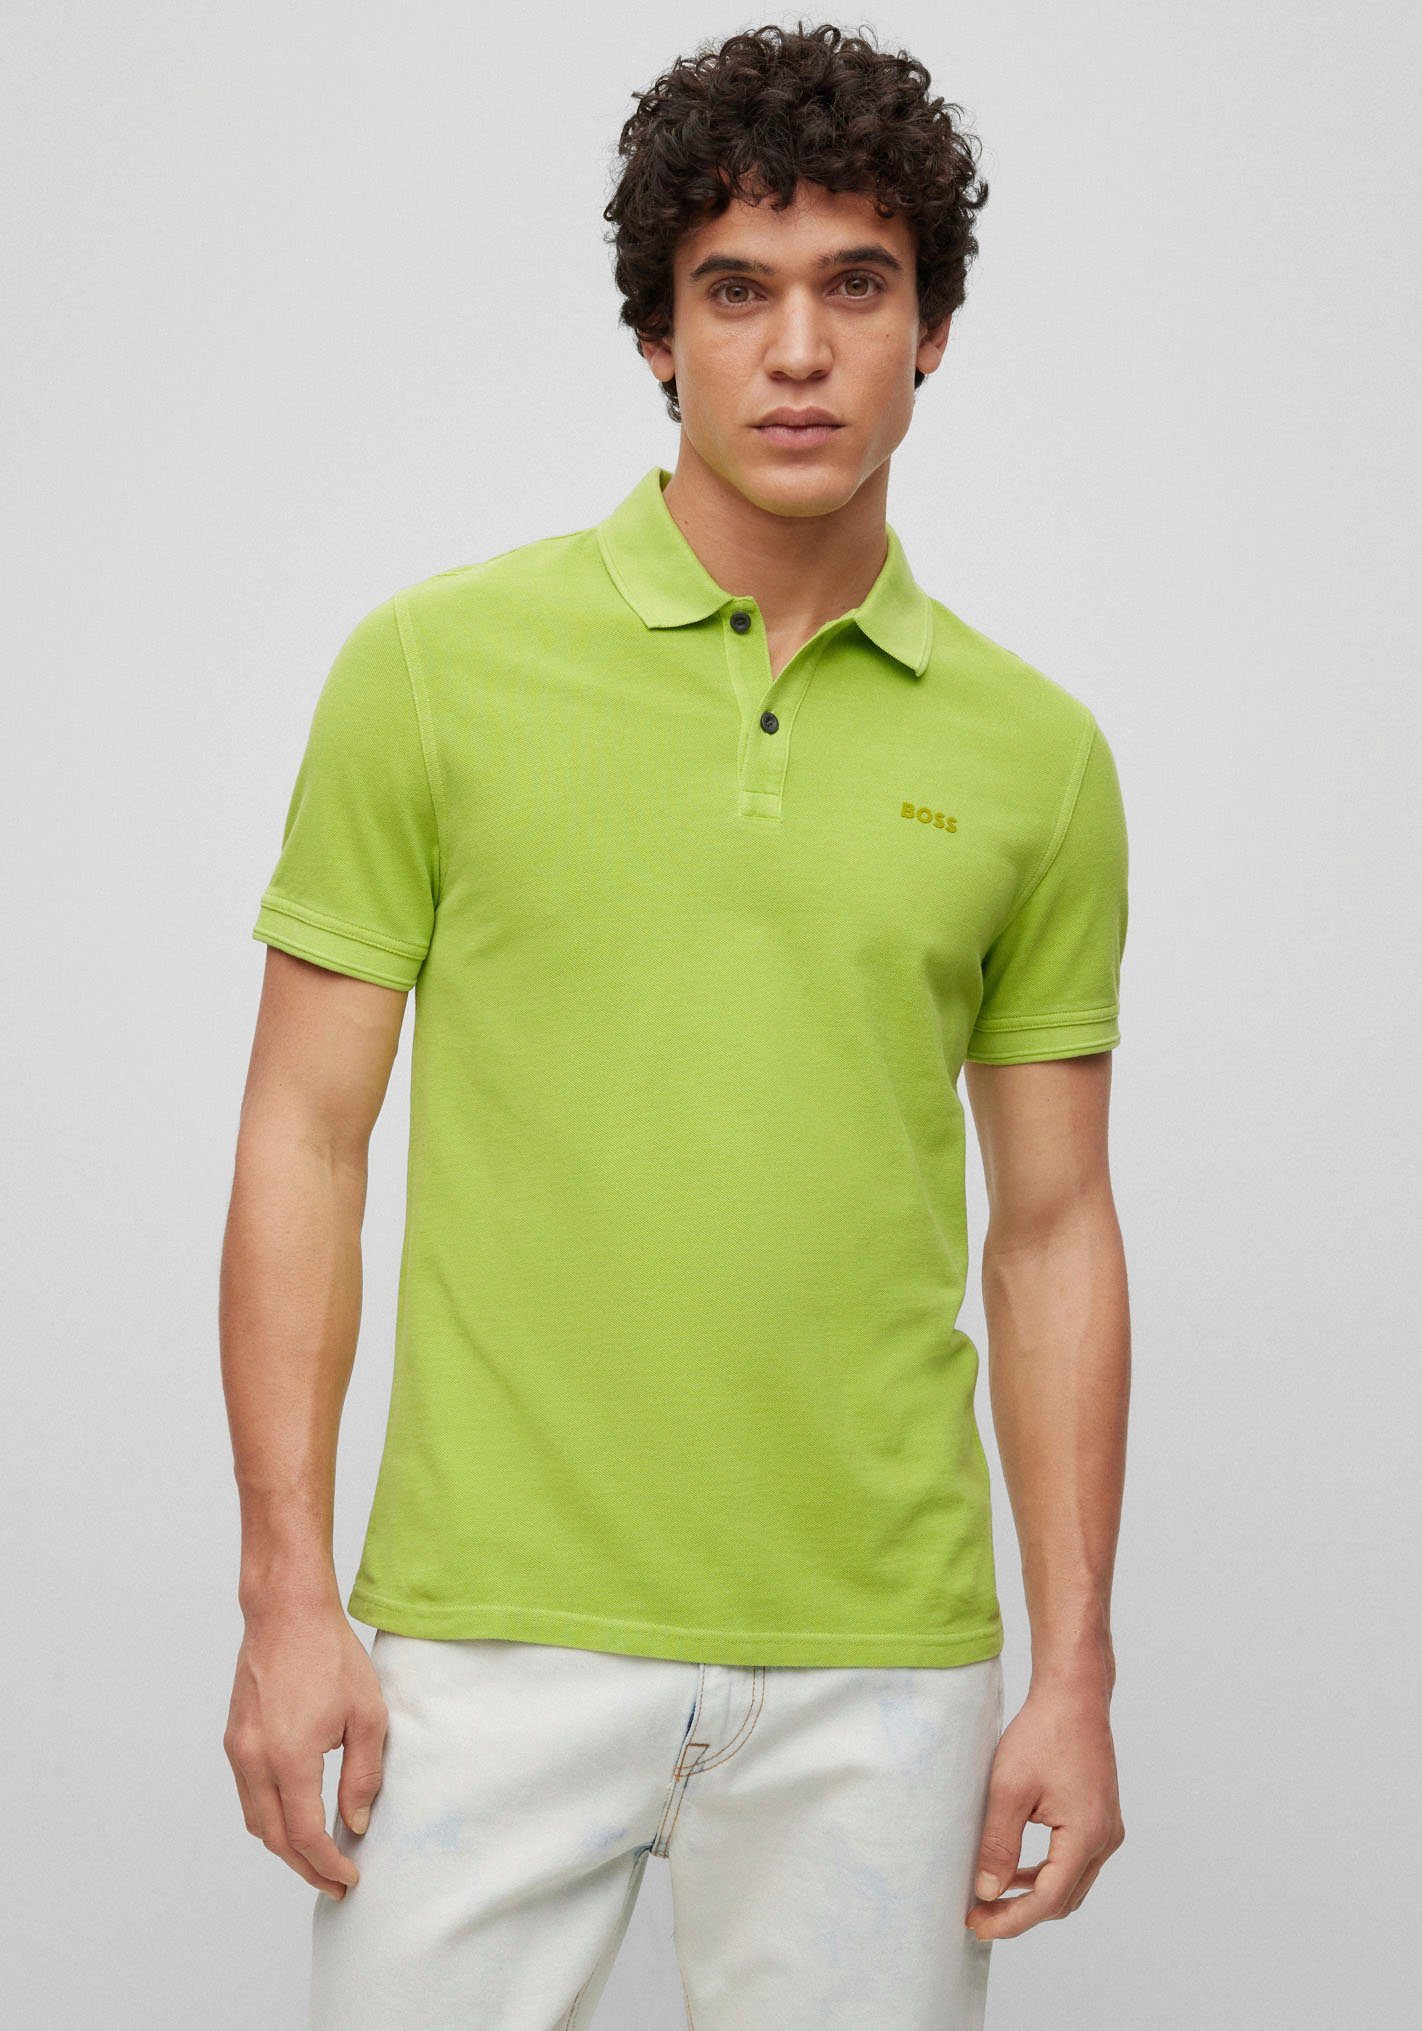 BOSS ORANGE Prime am Green Logoschriftzug Brustkorb Bright mit Poloshirt